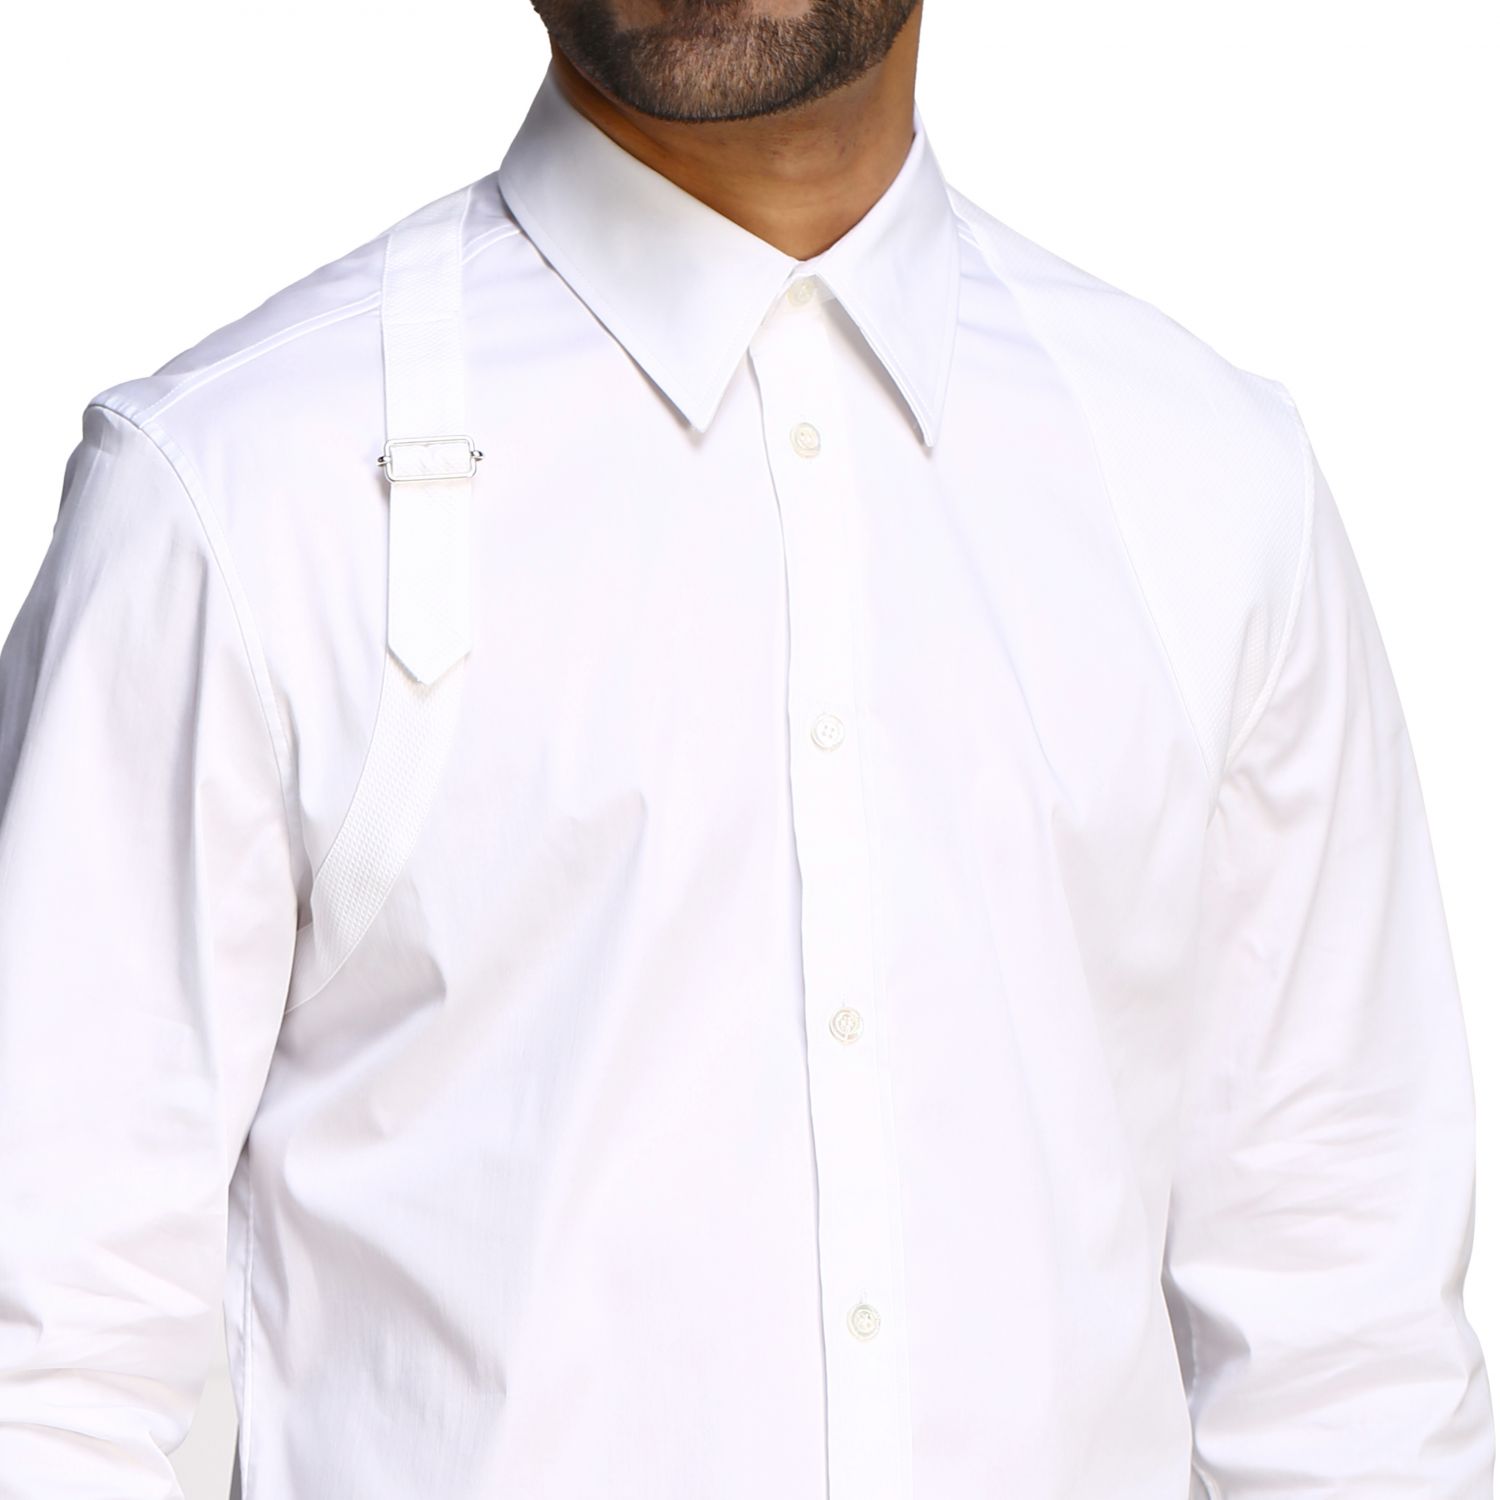 White Alexander Mcqueen Shirt Discount, 60% OFF | www ...